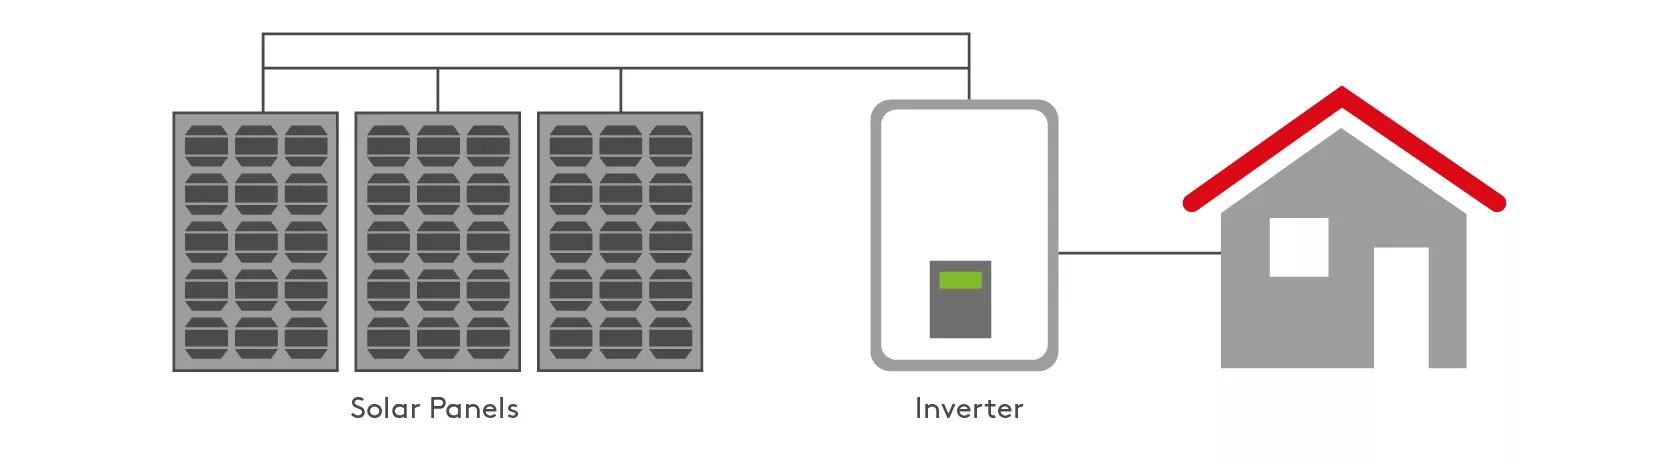 solar inverters working diagram 